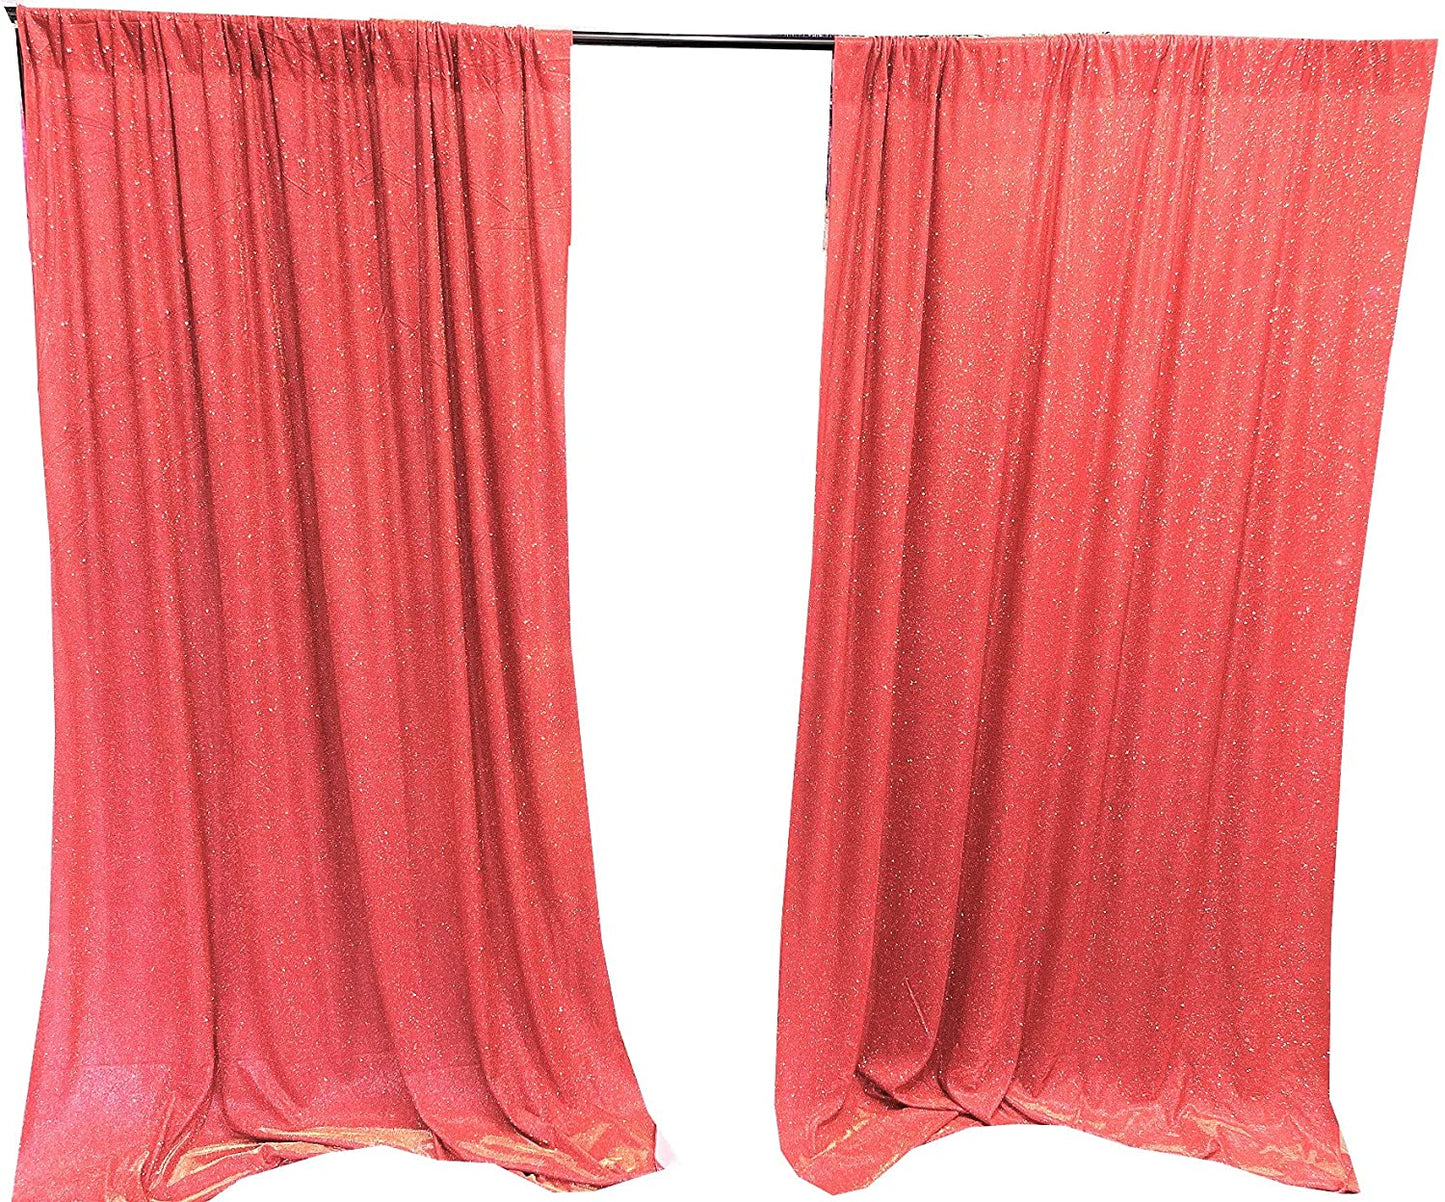 Full Covered Glitter Shimmer on Fabric Backdrop Drape - Curtain - Wedding Party Decoration (2 Panels Burnt Orange